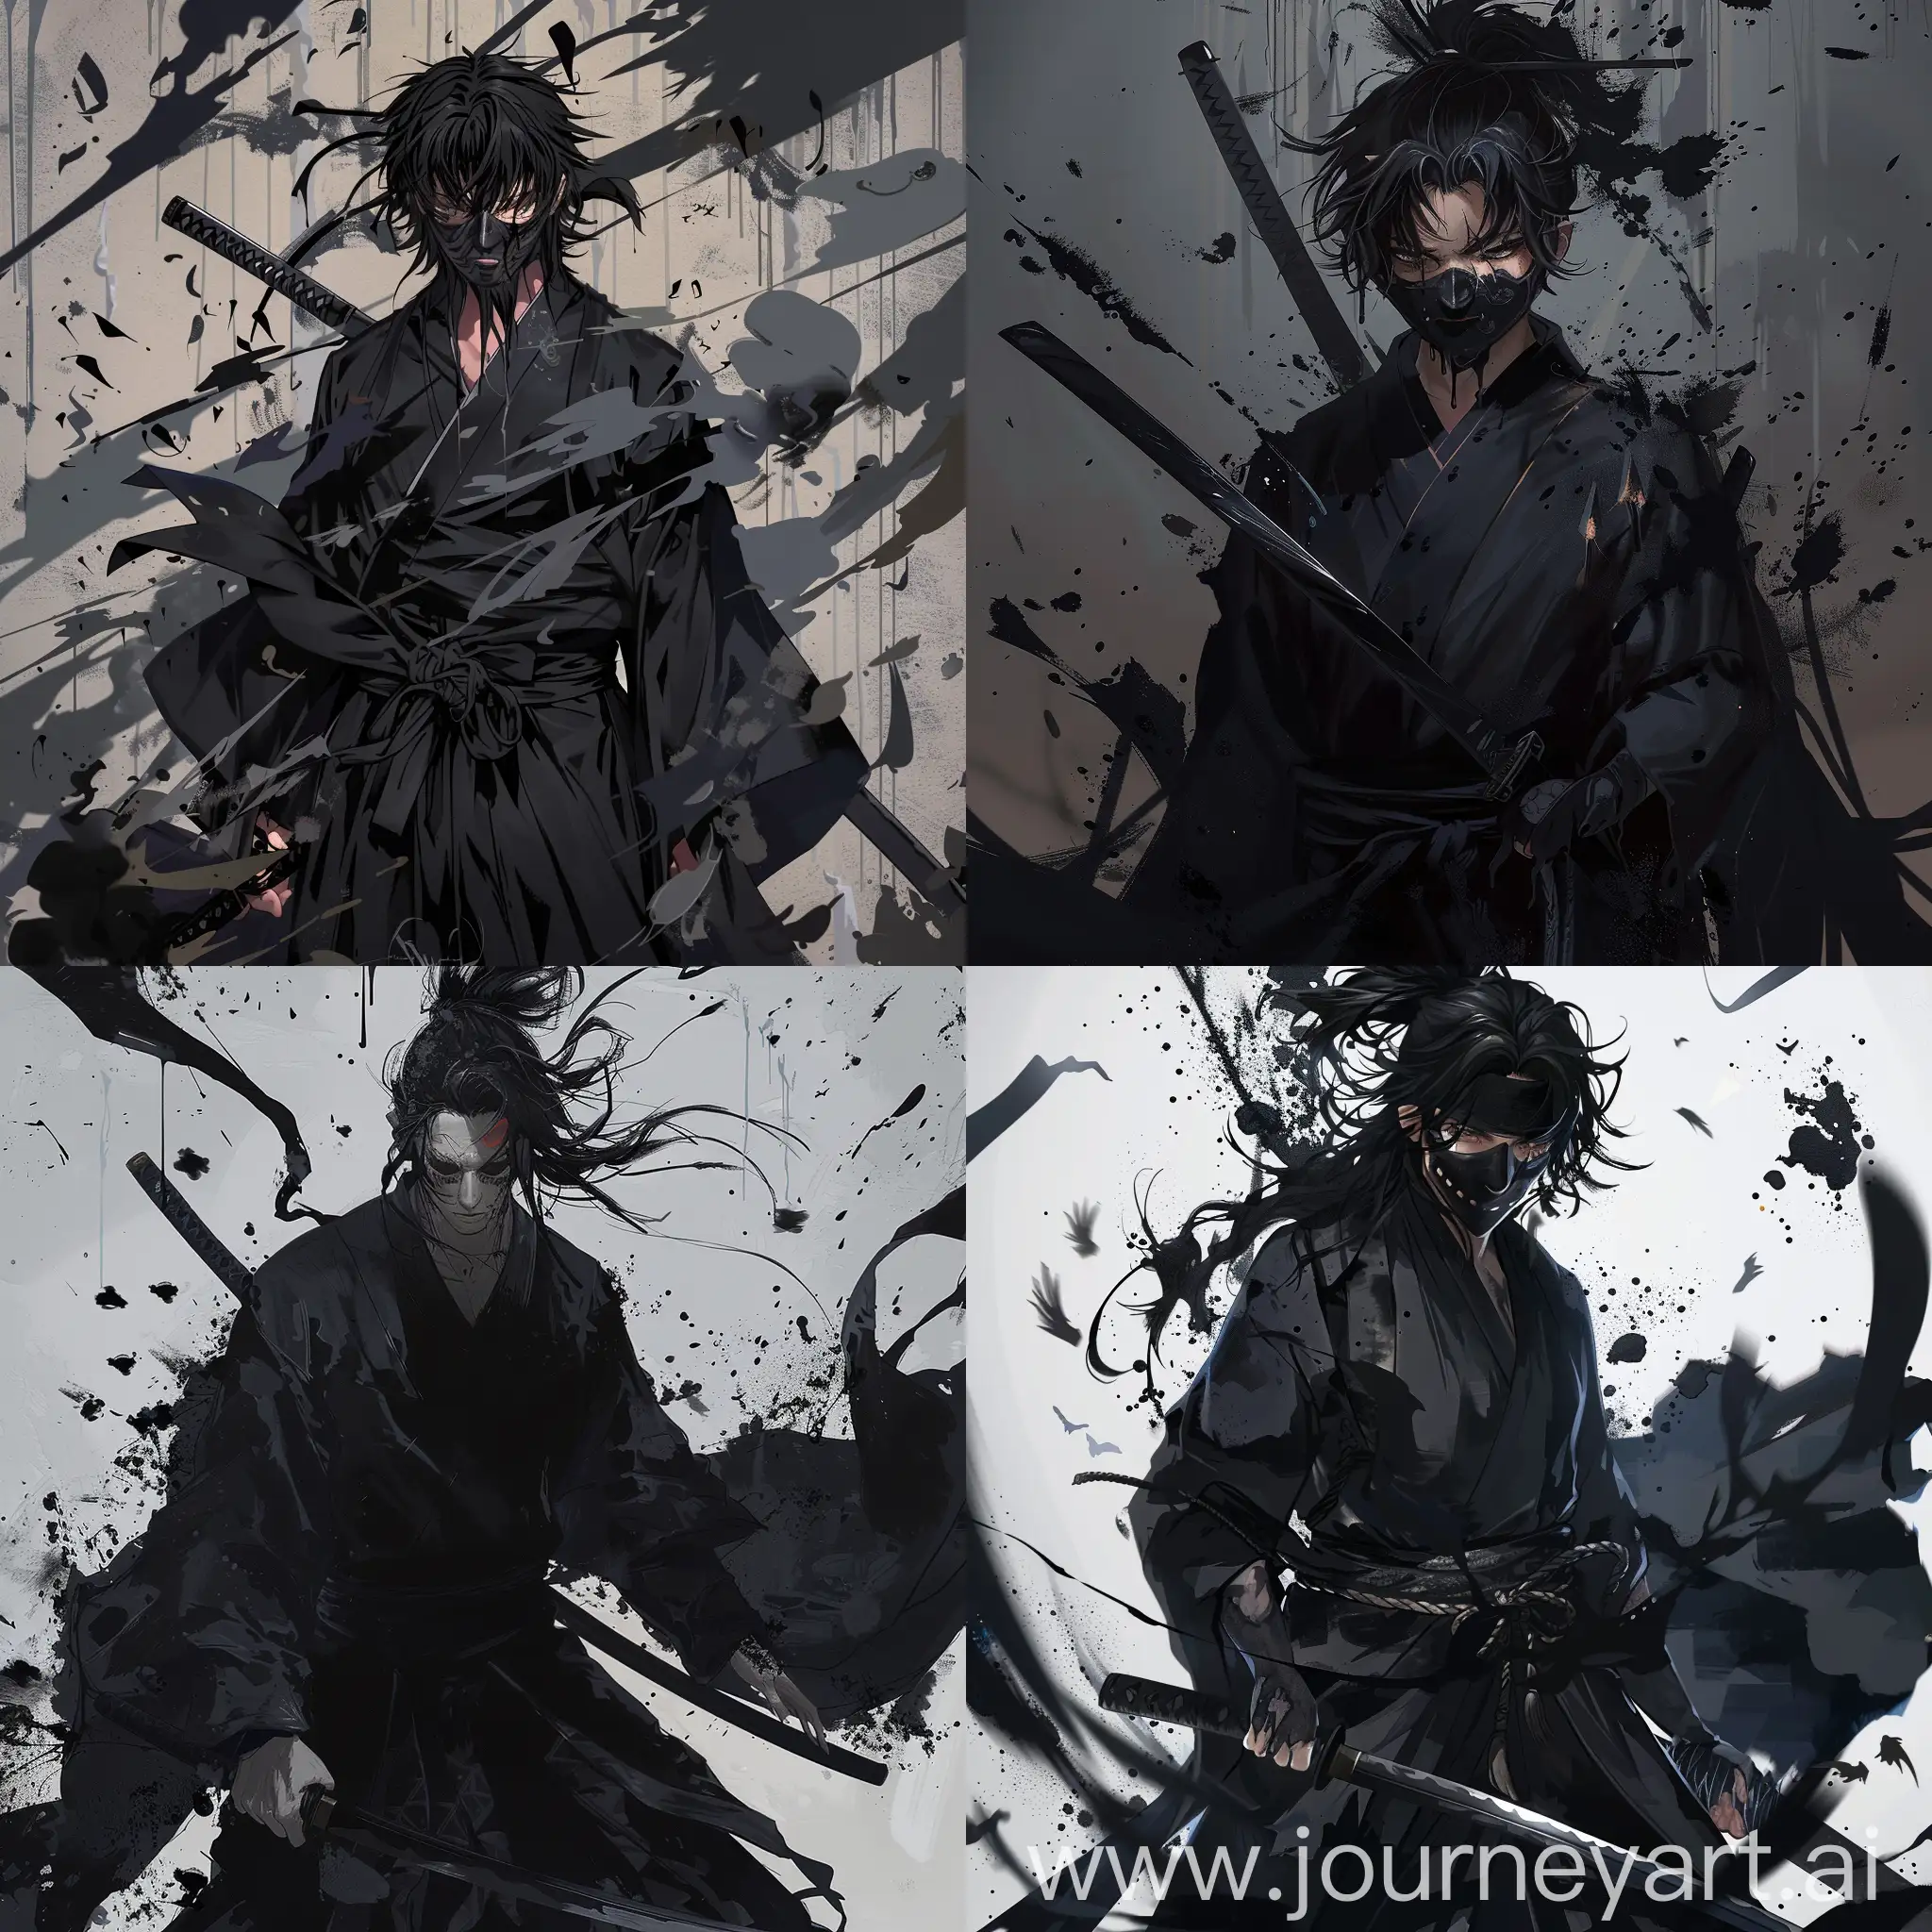 Black haired male, full body, black kimono, black katana, vagabond manga style, surrounded by shadows, anger and sadness, oni mask, shadows leaking from he blade